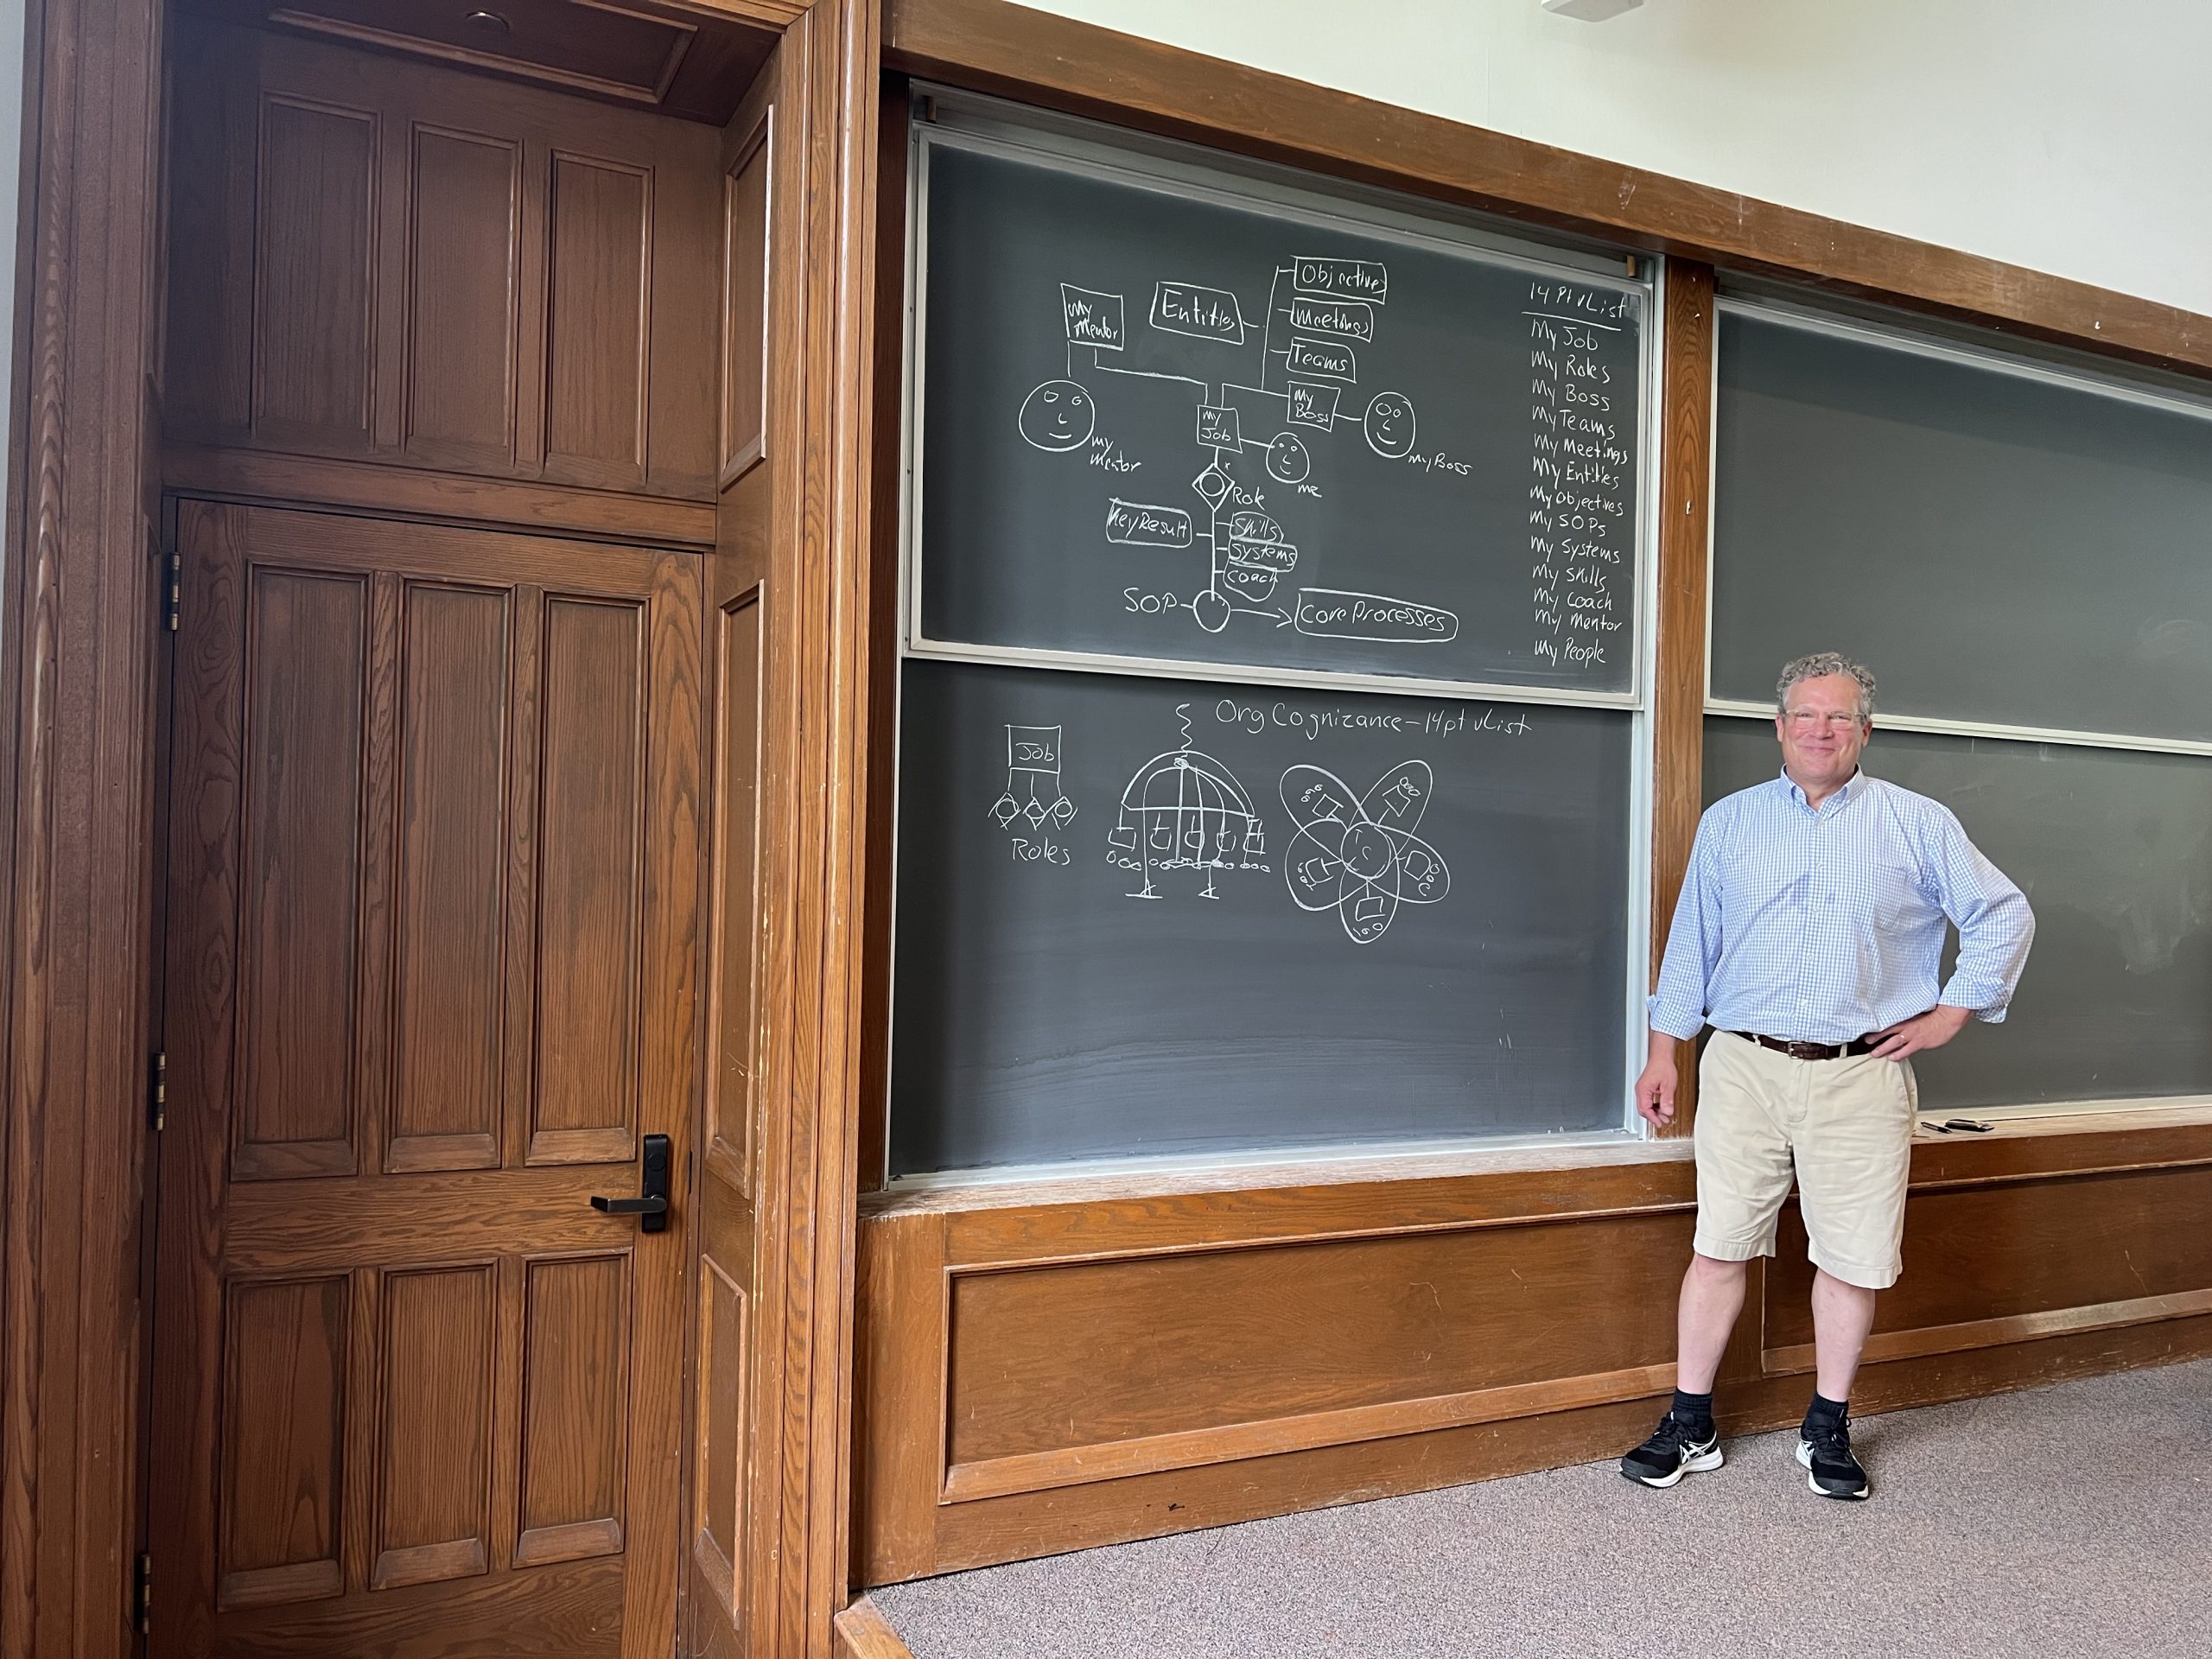 Walt at blackboard describing org graphs